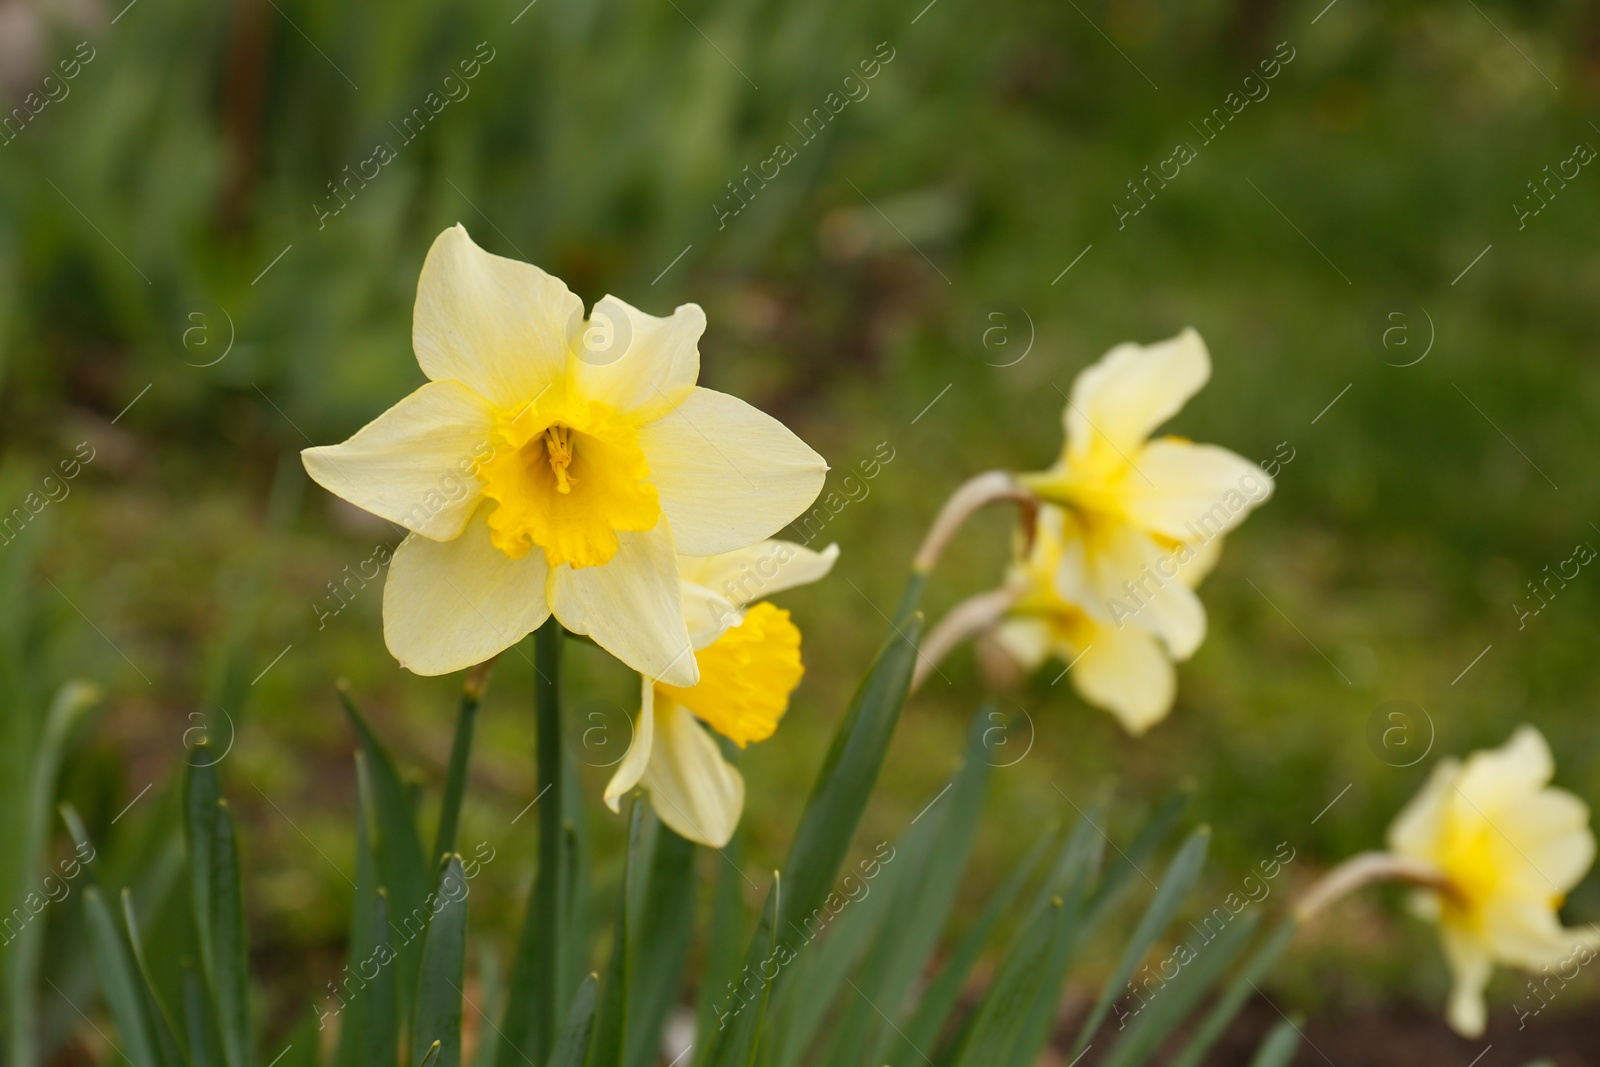 Photo of Beautiful blooming daffodils growing in garden, closeup. Spring flower